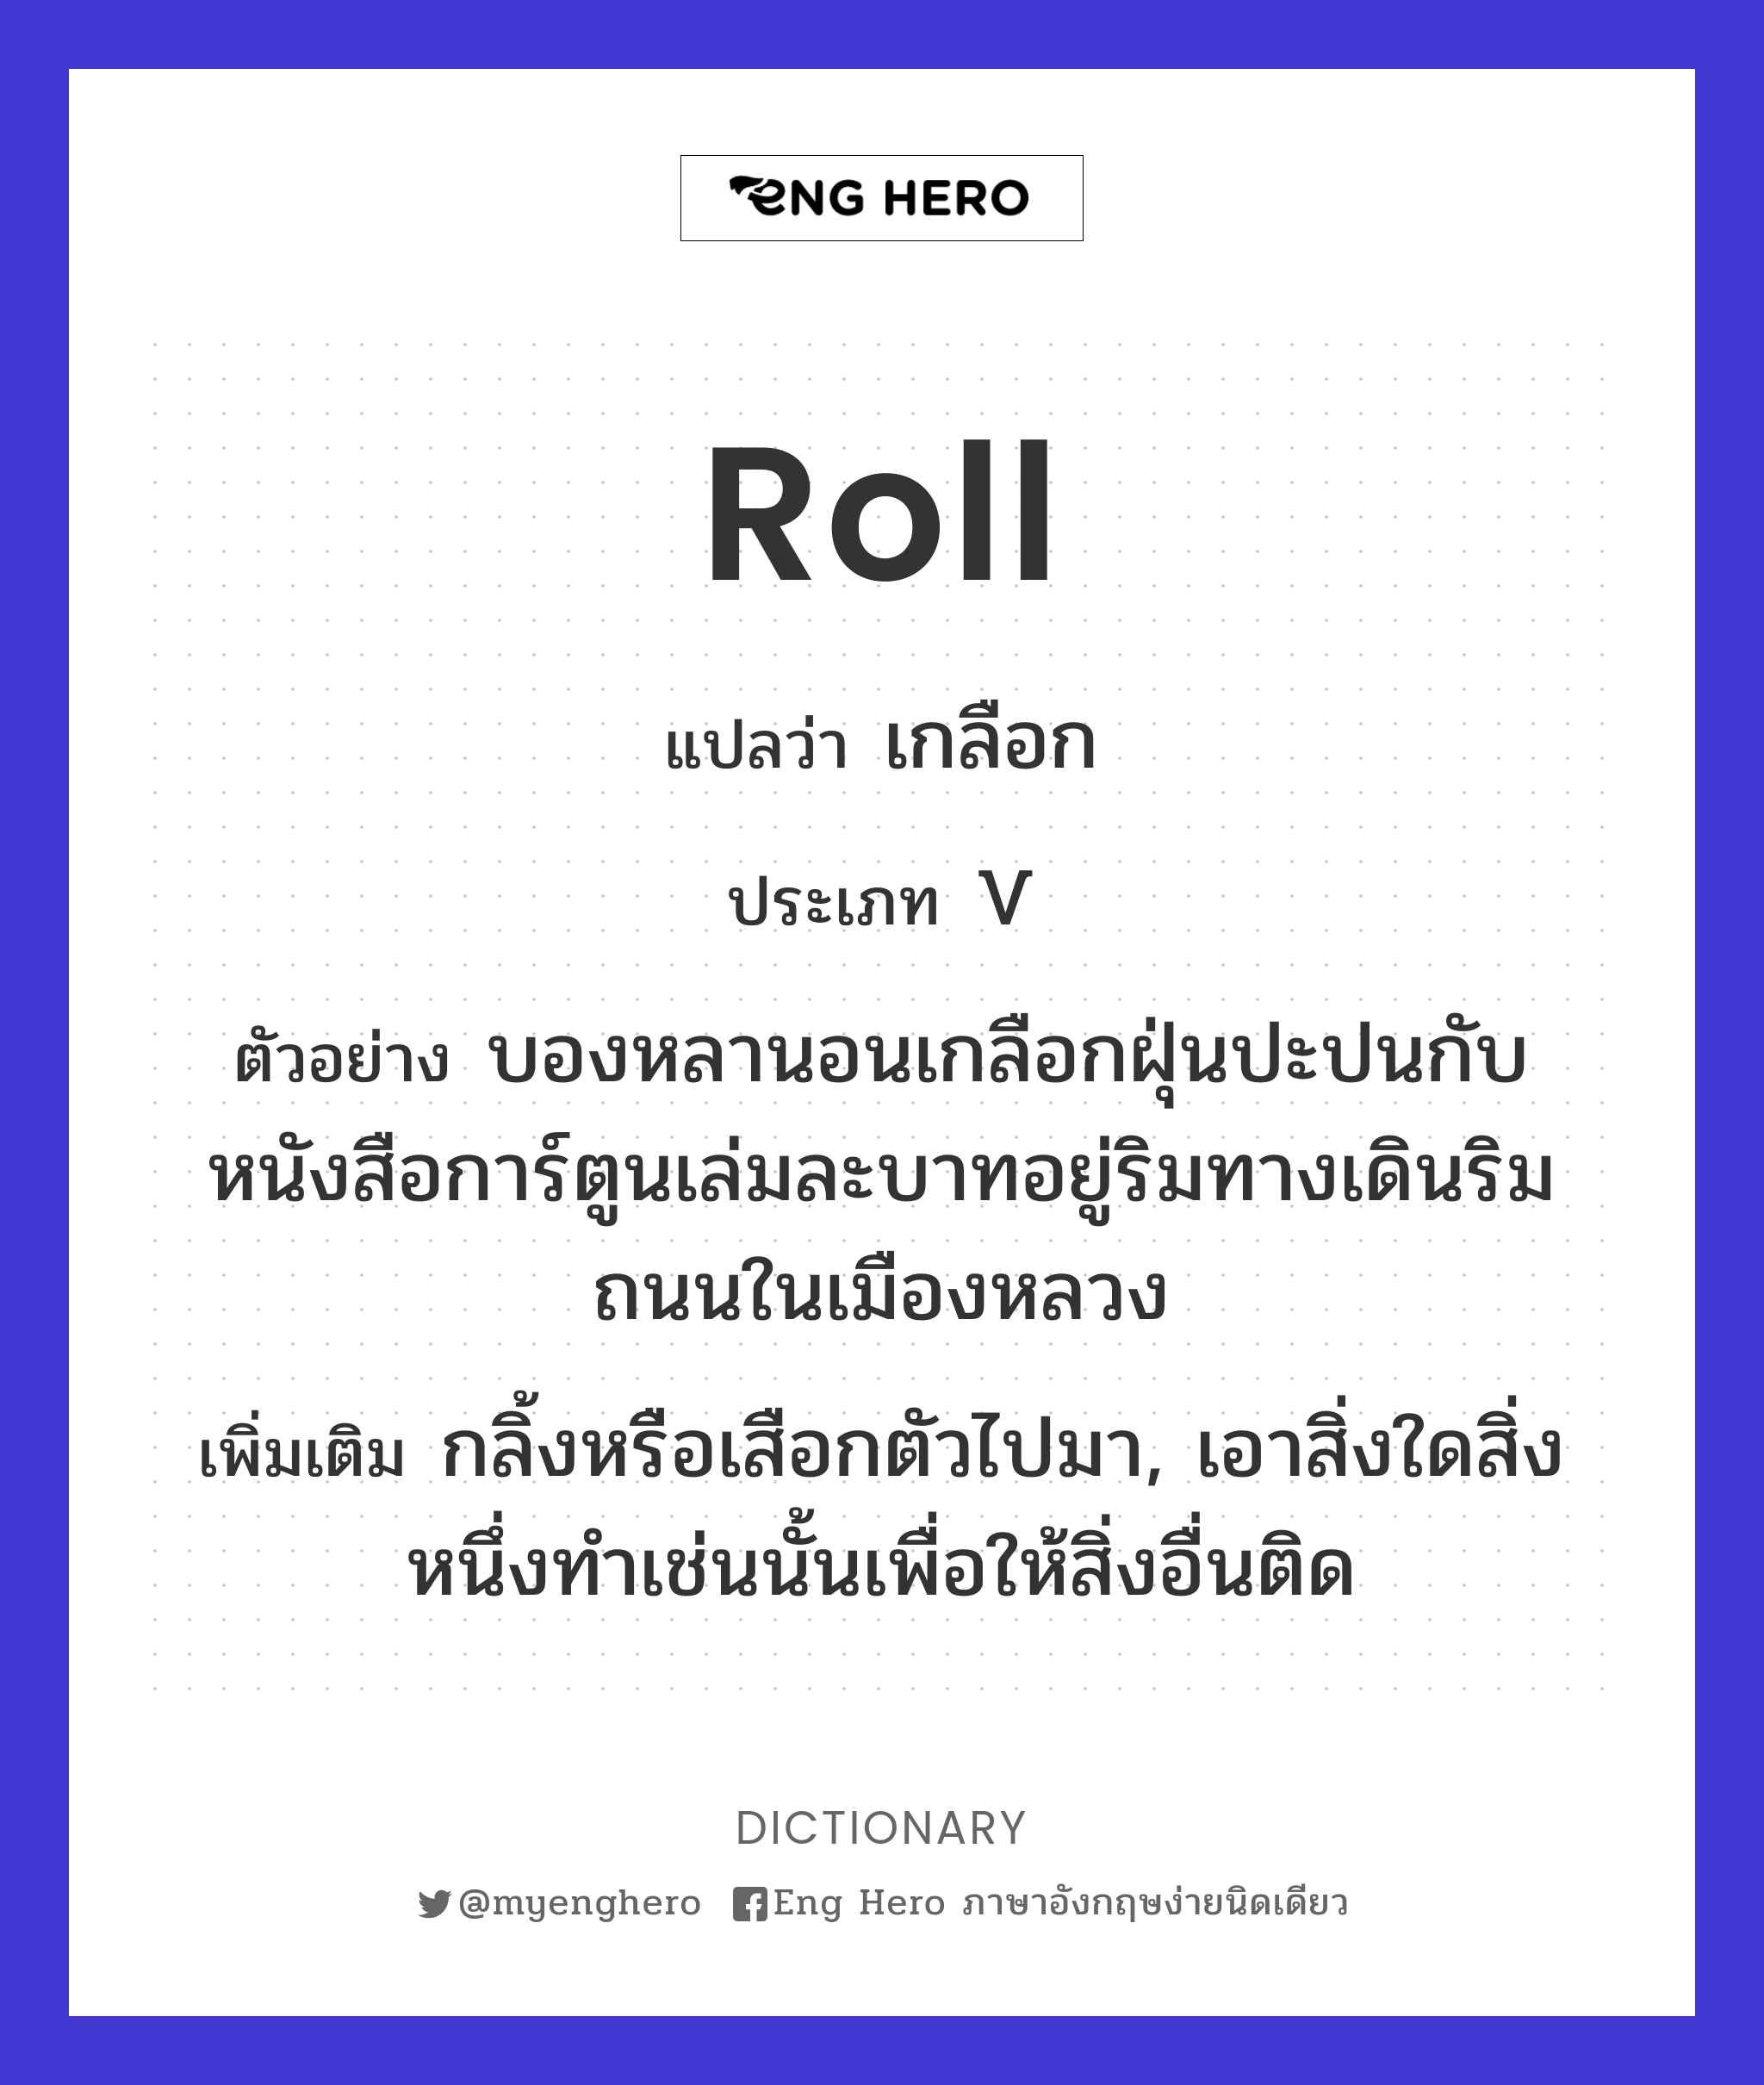 roll